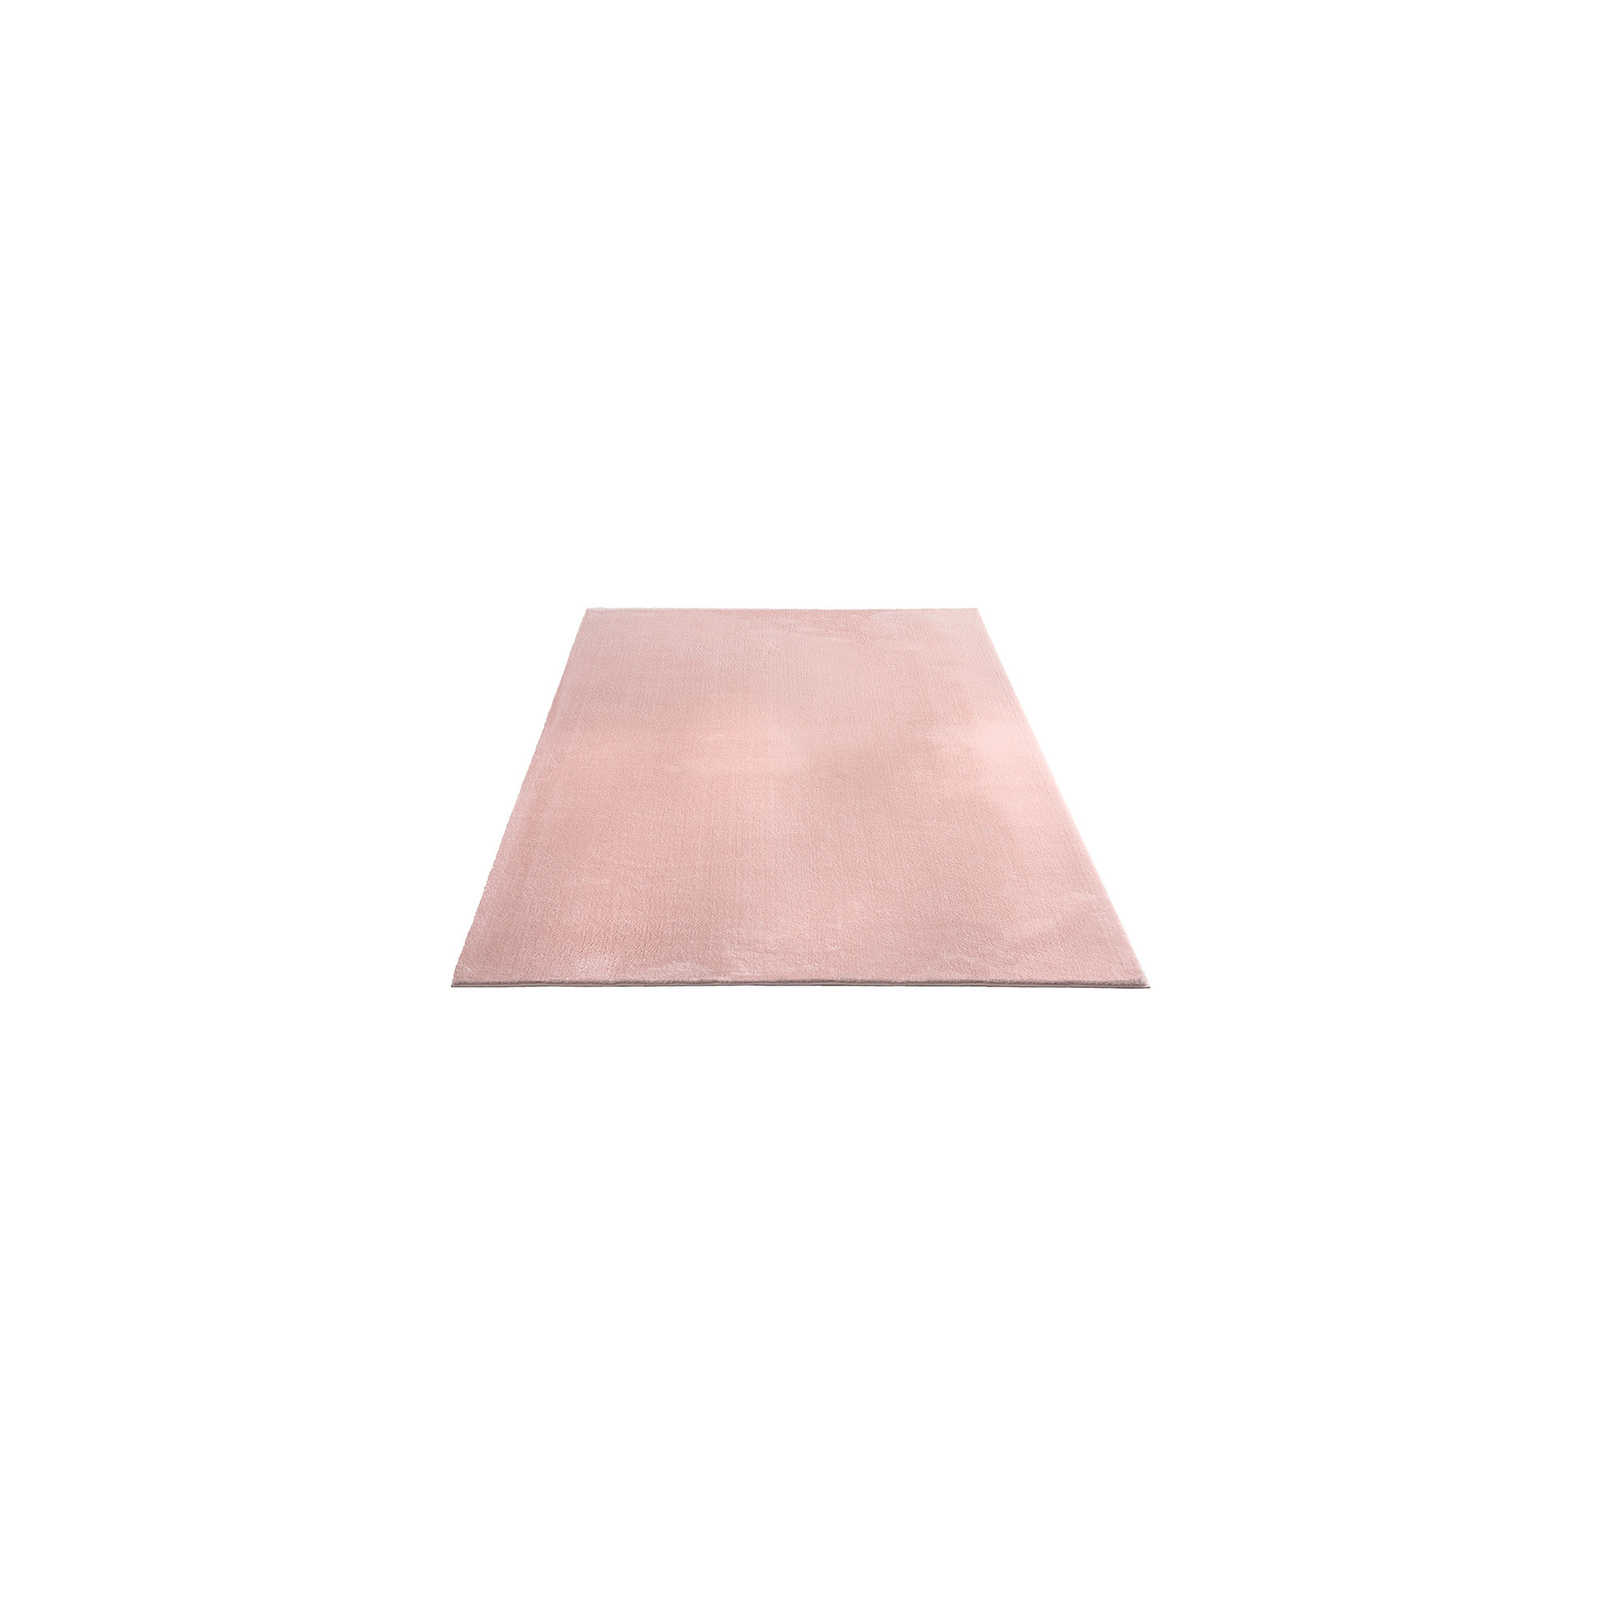 Delicate pile carpet in pink - 150 x 80 cm
